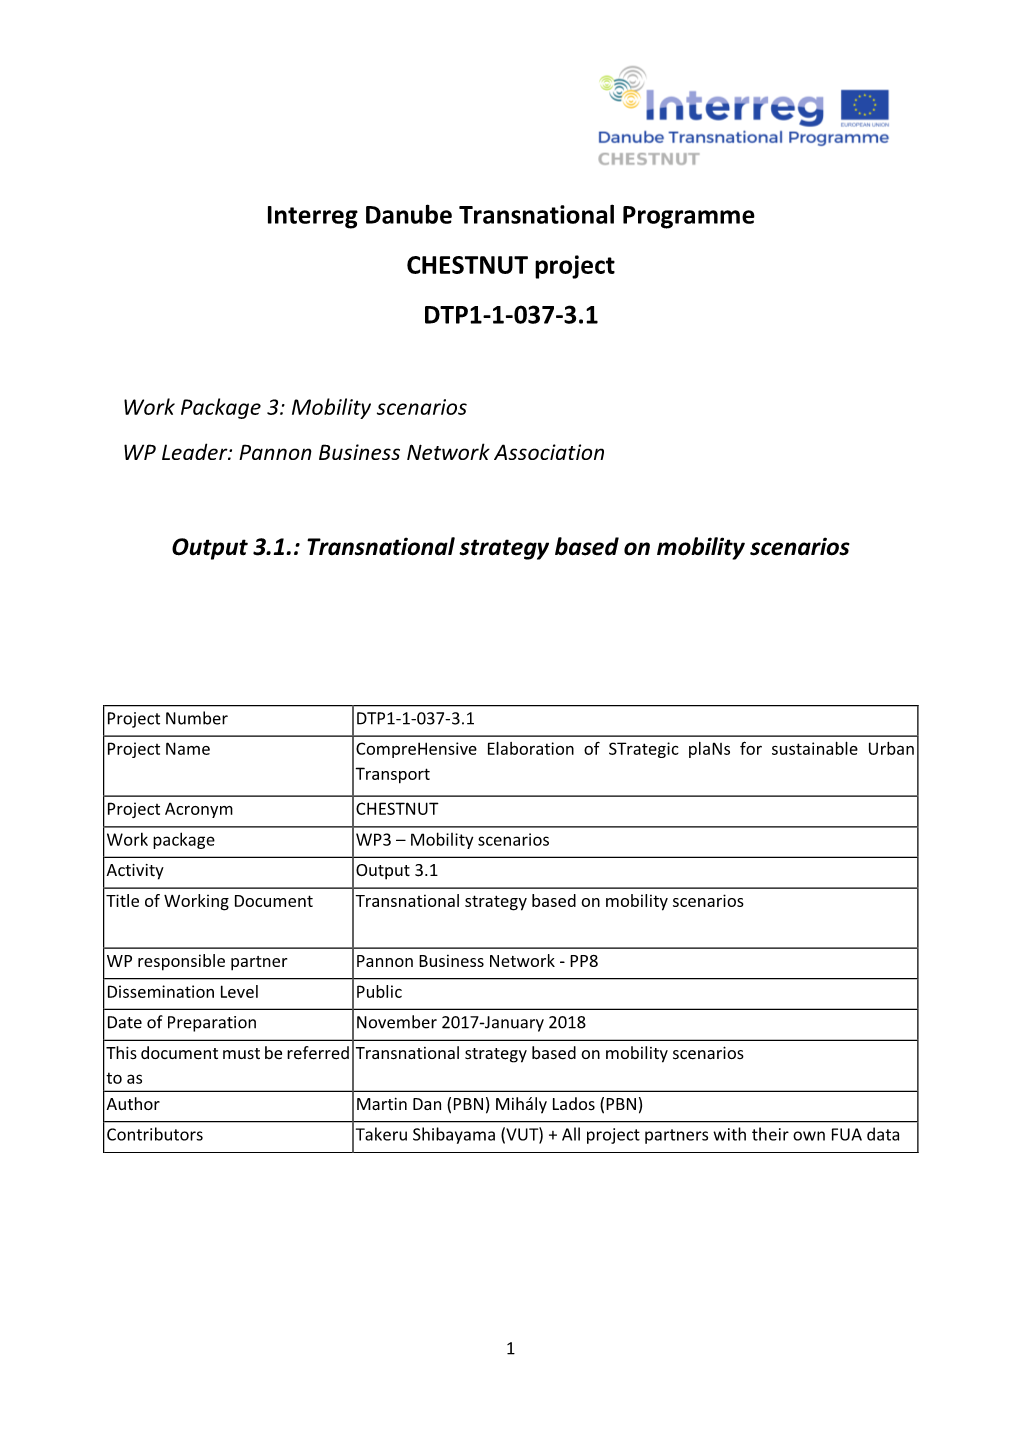 Interreg Danube Transnational Programme CHESTNUT Project DTP1-1-037-3.1